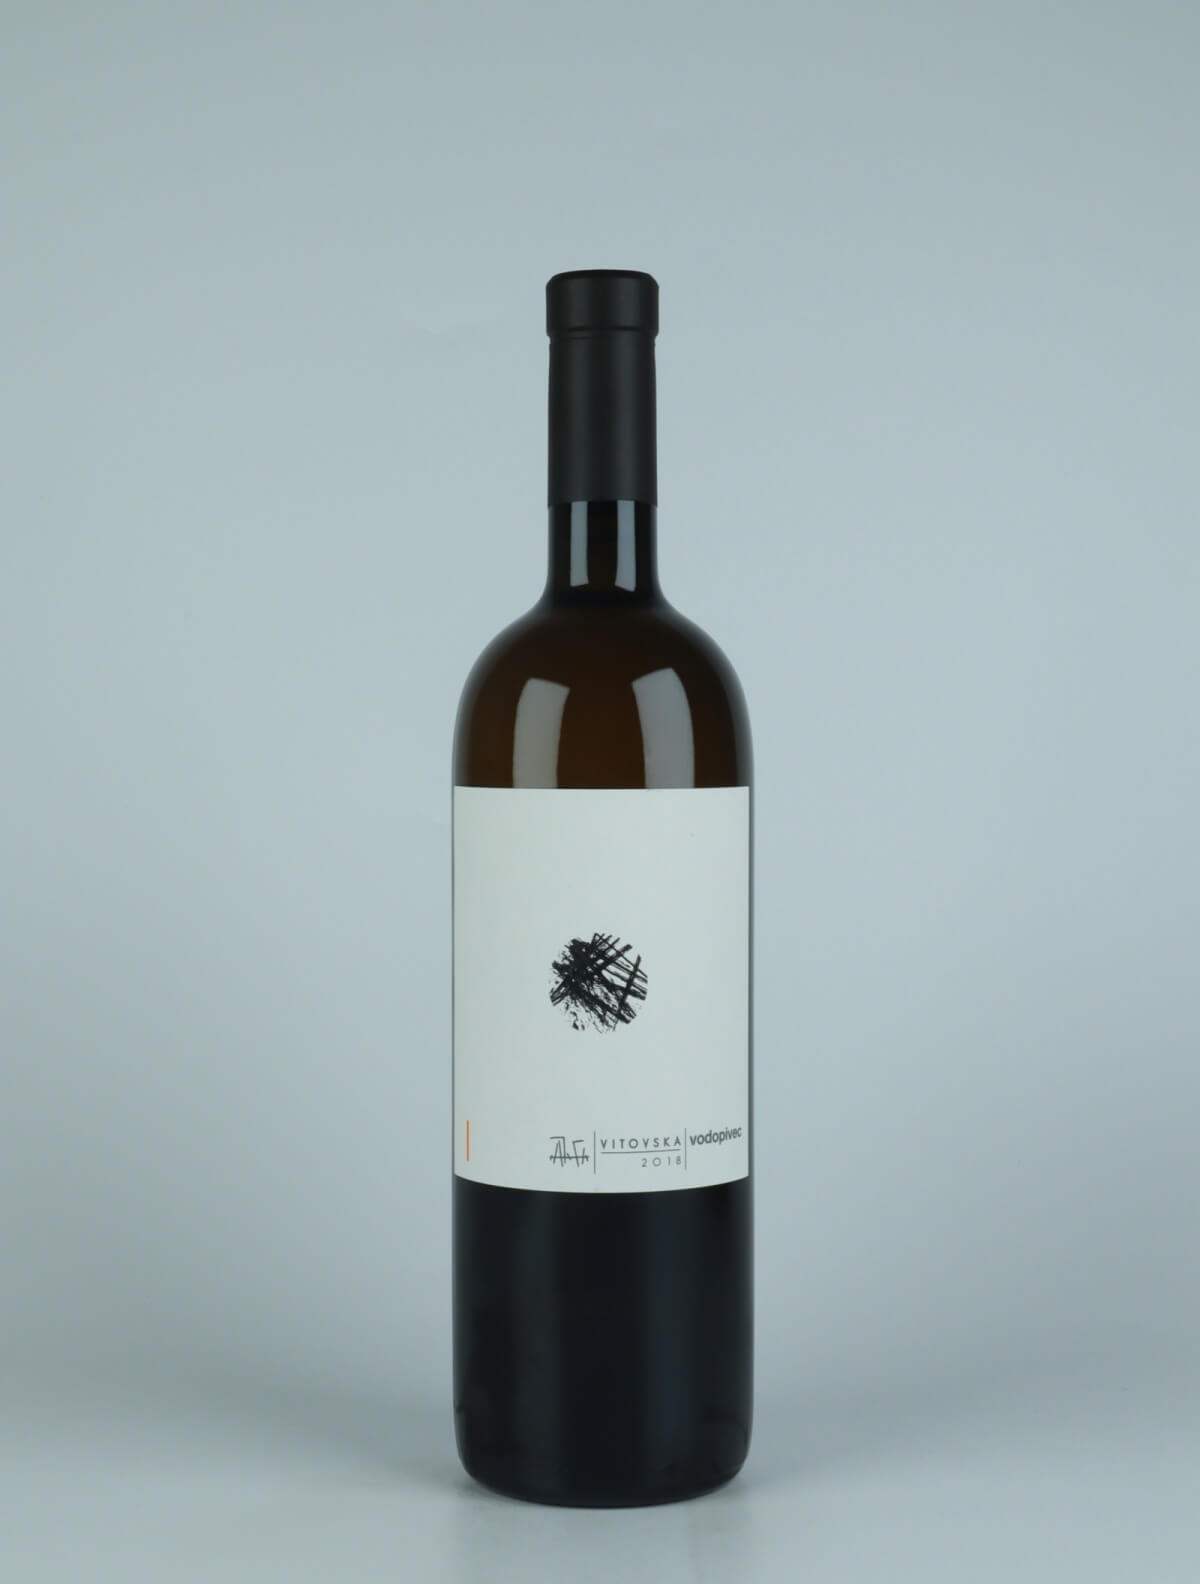 A bottle 2018 Vitovska Orange wine from , Friuli in Italy